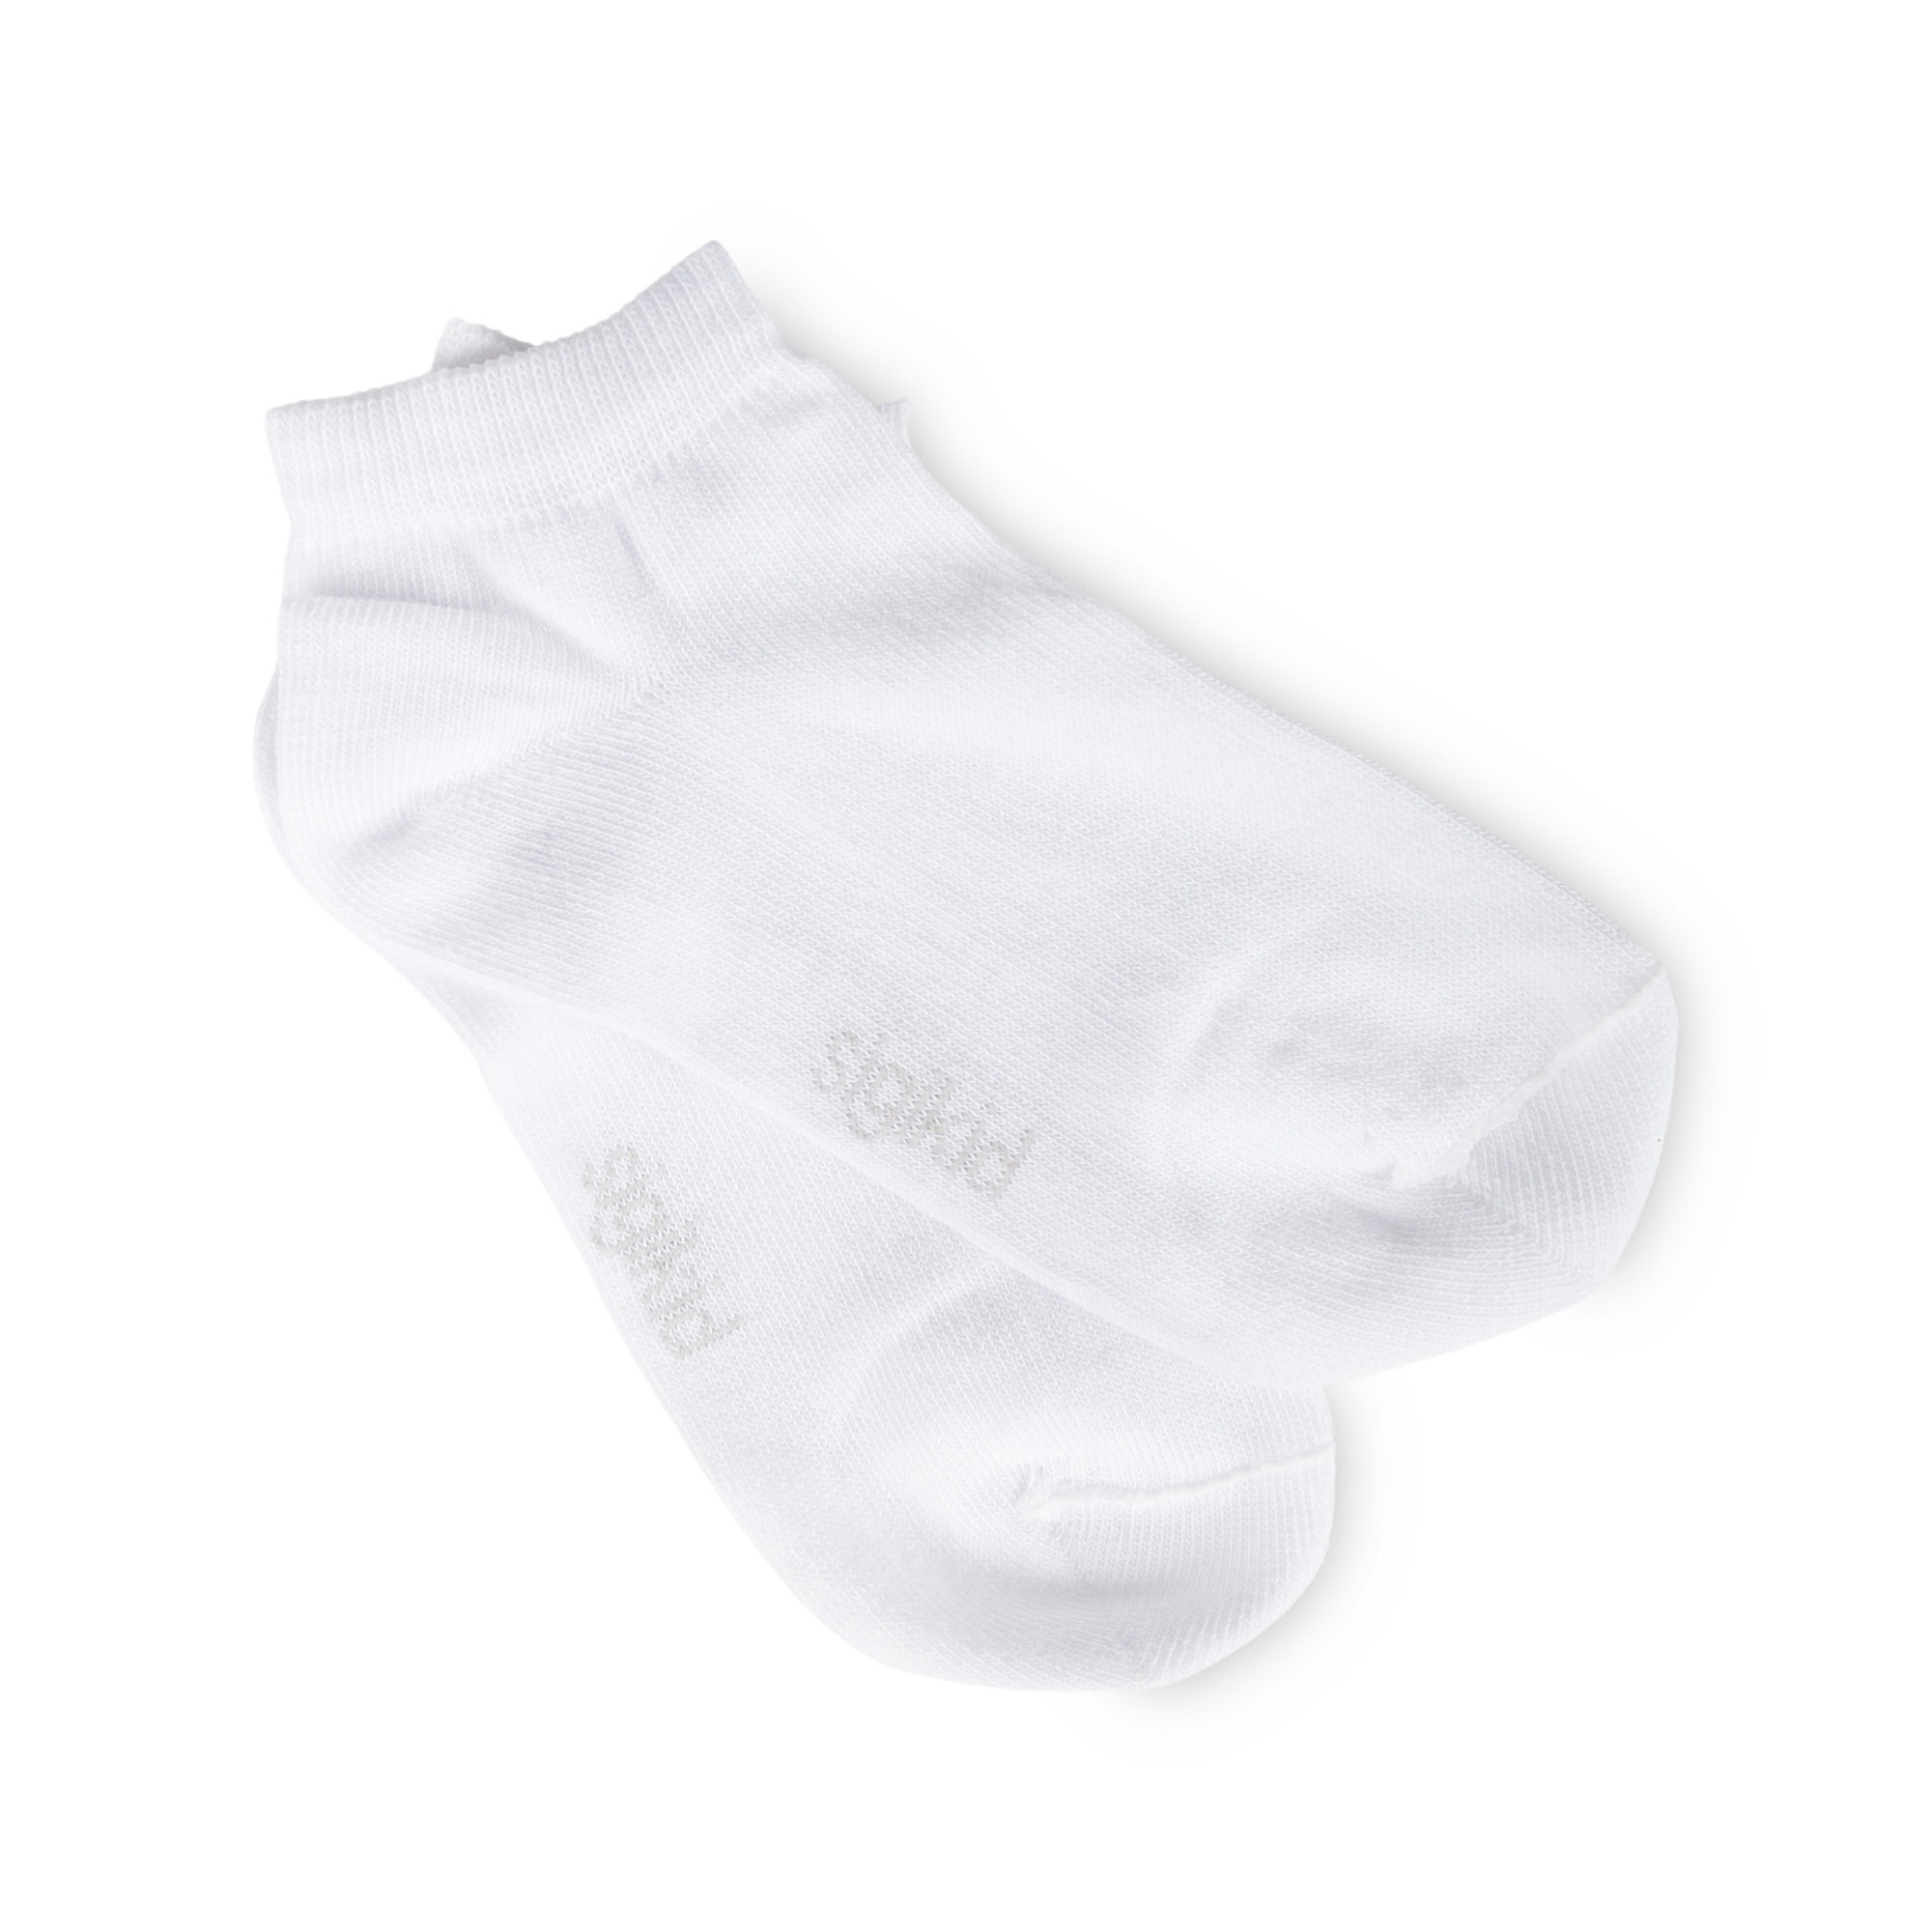 Children's trainer socks, white